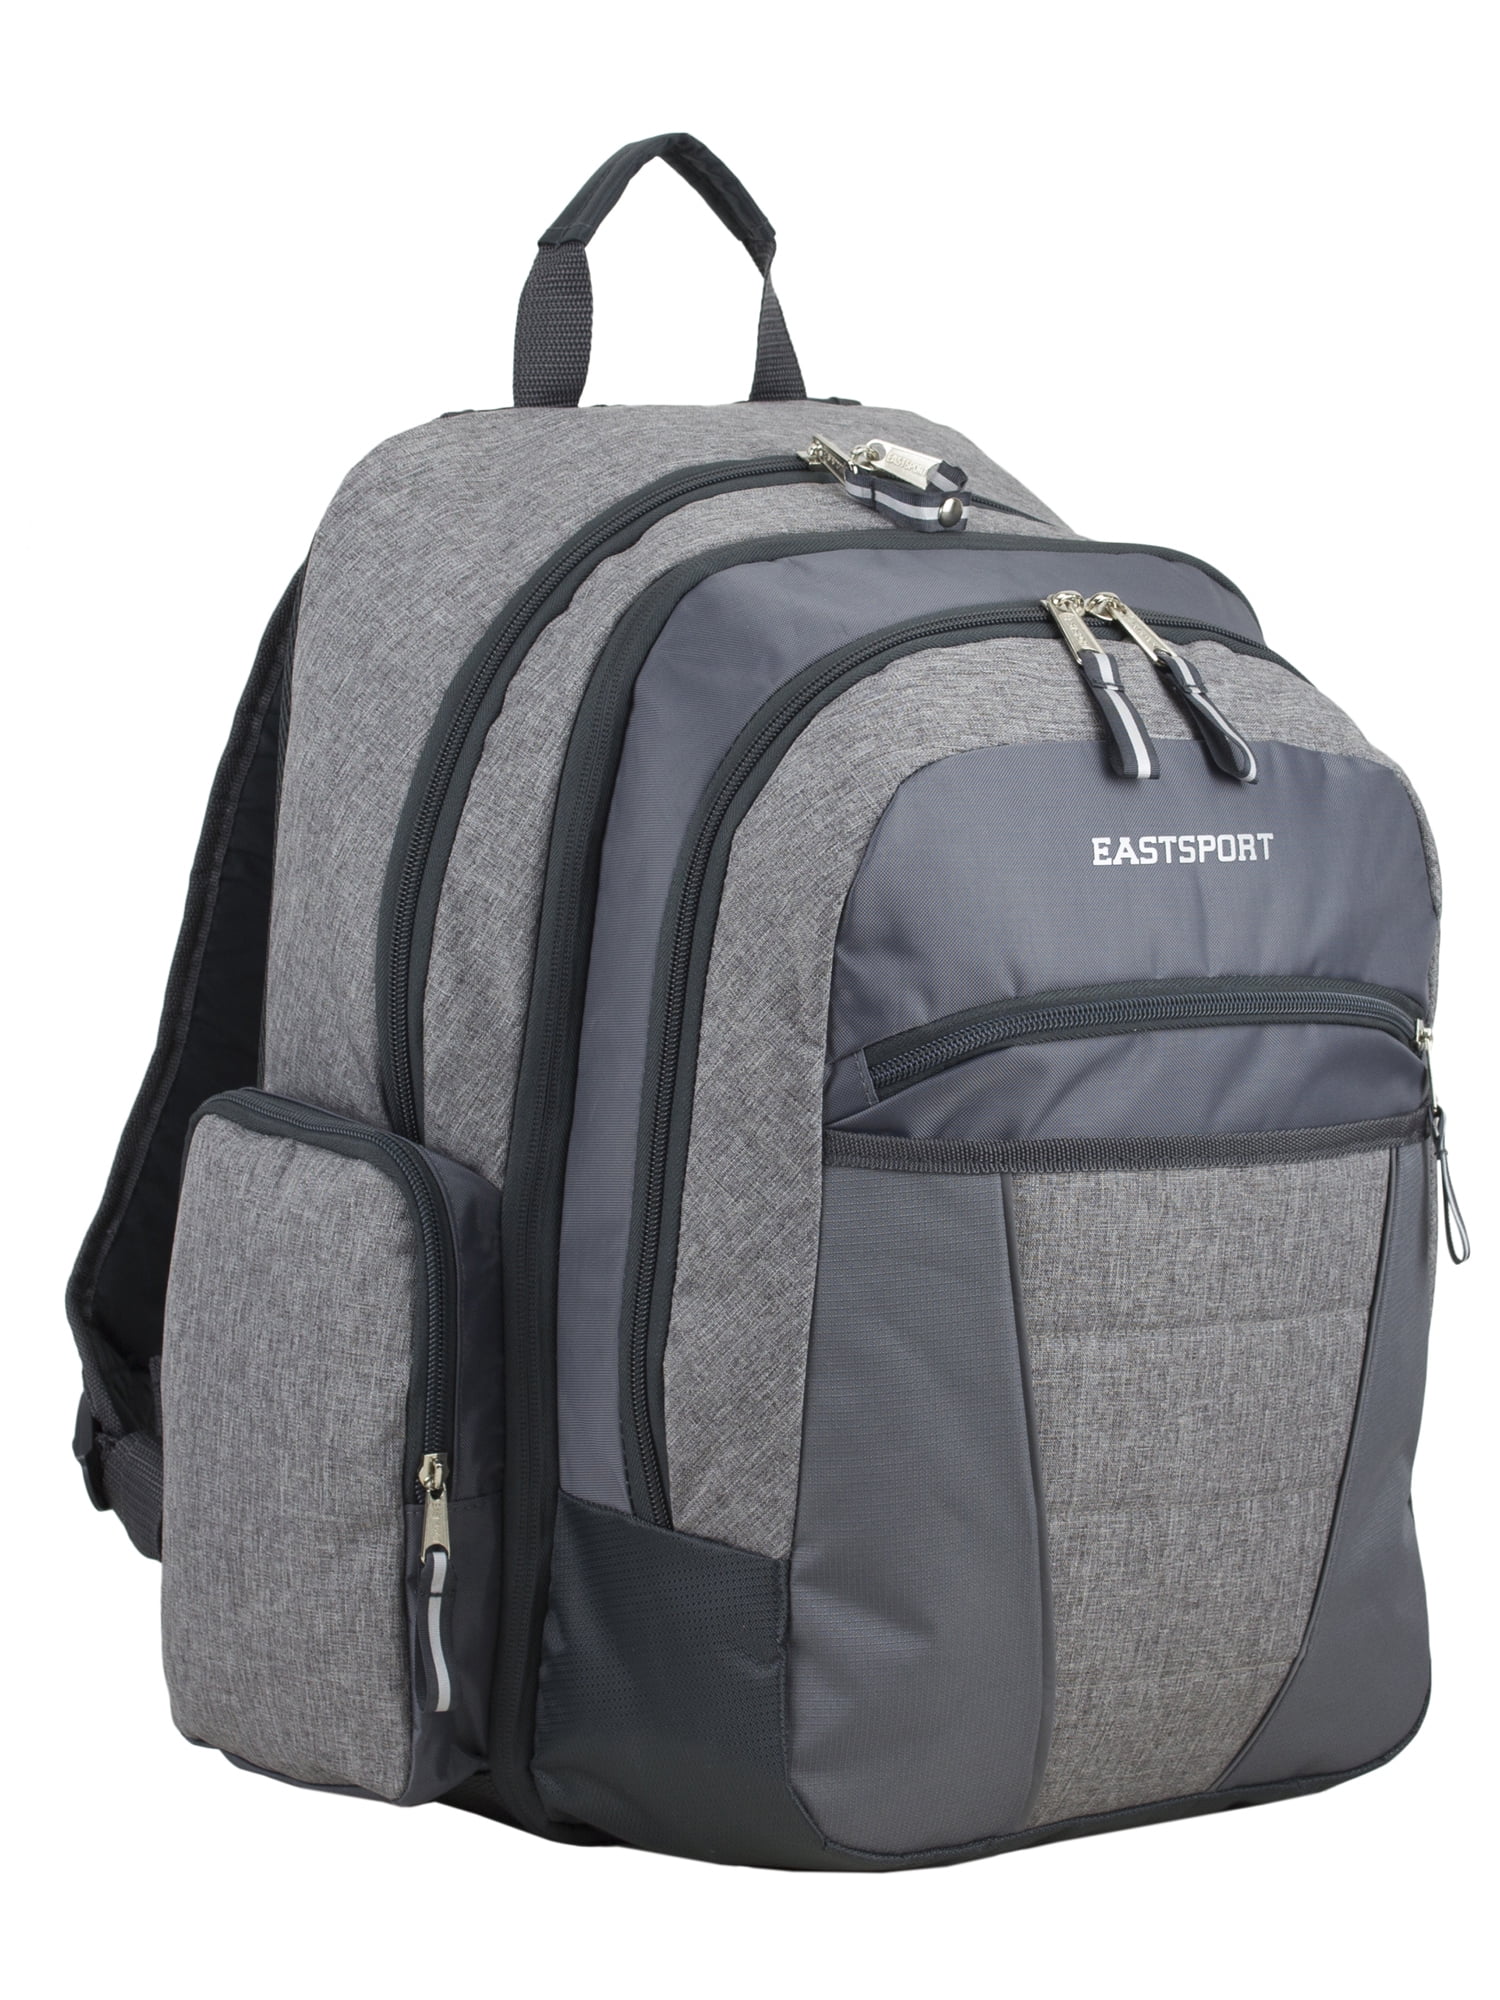 Eastsport Expandable Titan Backpack - Walmart.com